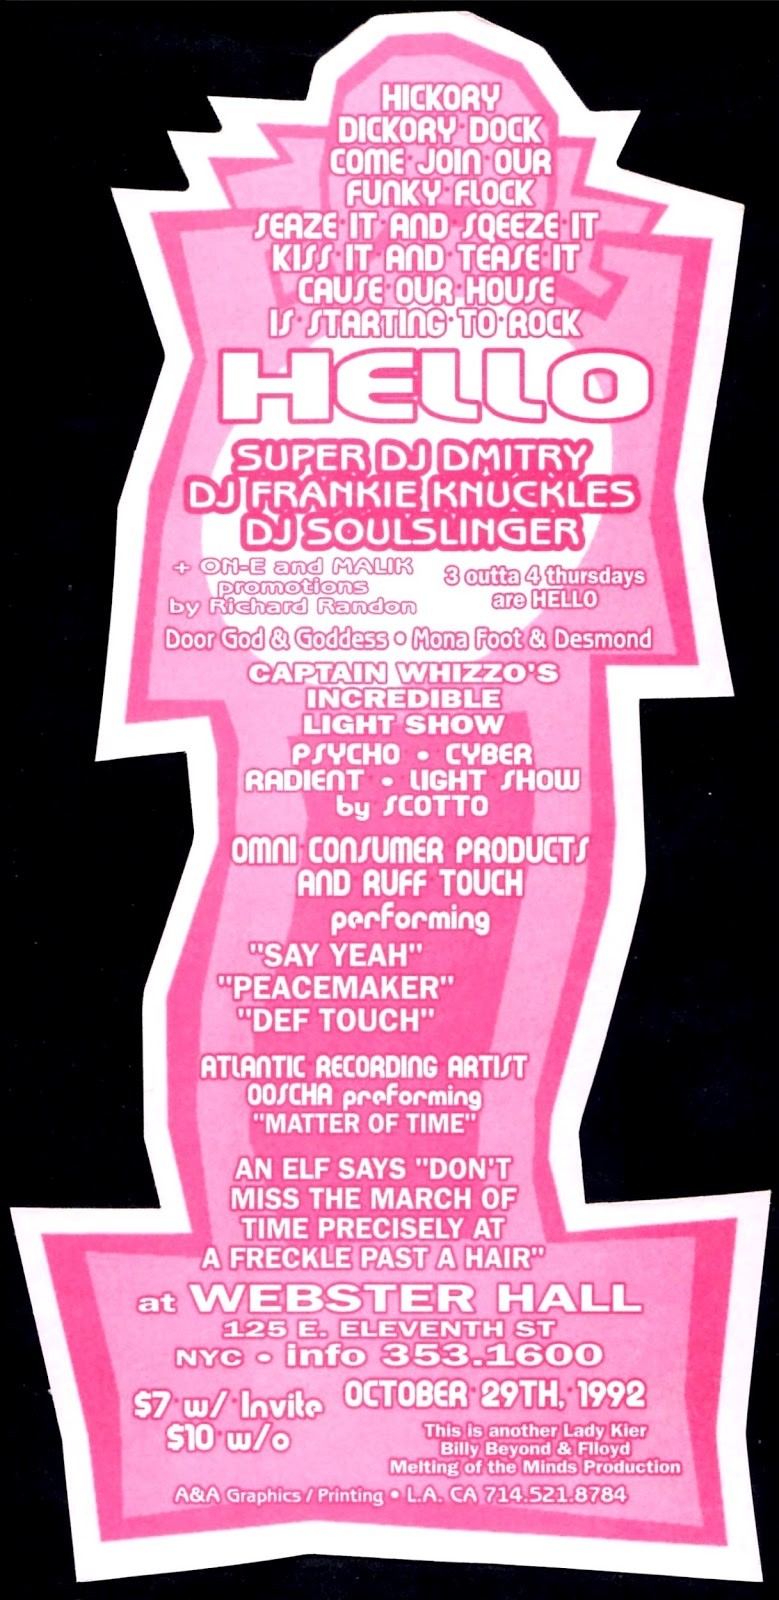 ON-E &amp; MALIK Present HELLO! Featuring SUPER DJ DMITRY DJ FRANKIE KNUCKLES DJ SOULSINGER Webster Hall - 125 E. Eleventh St. - NYC 10|29|1992